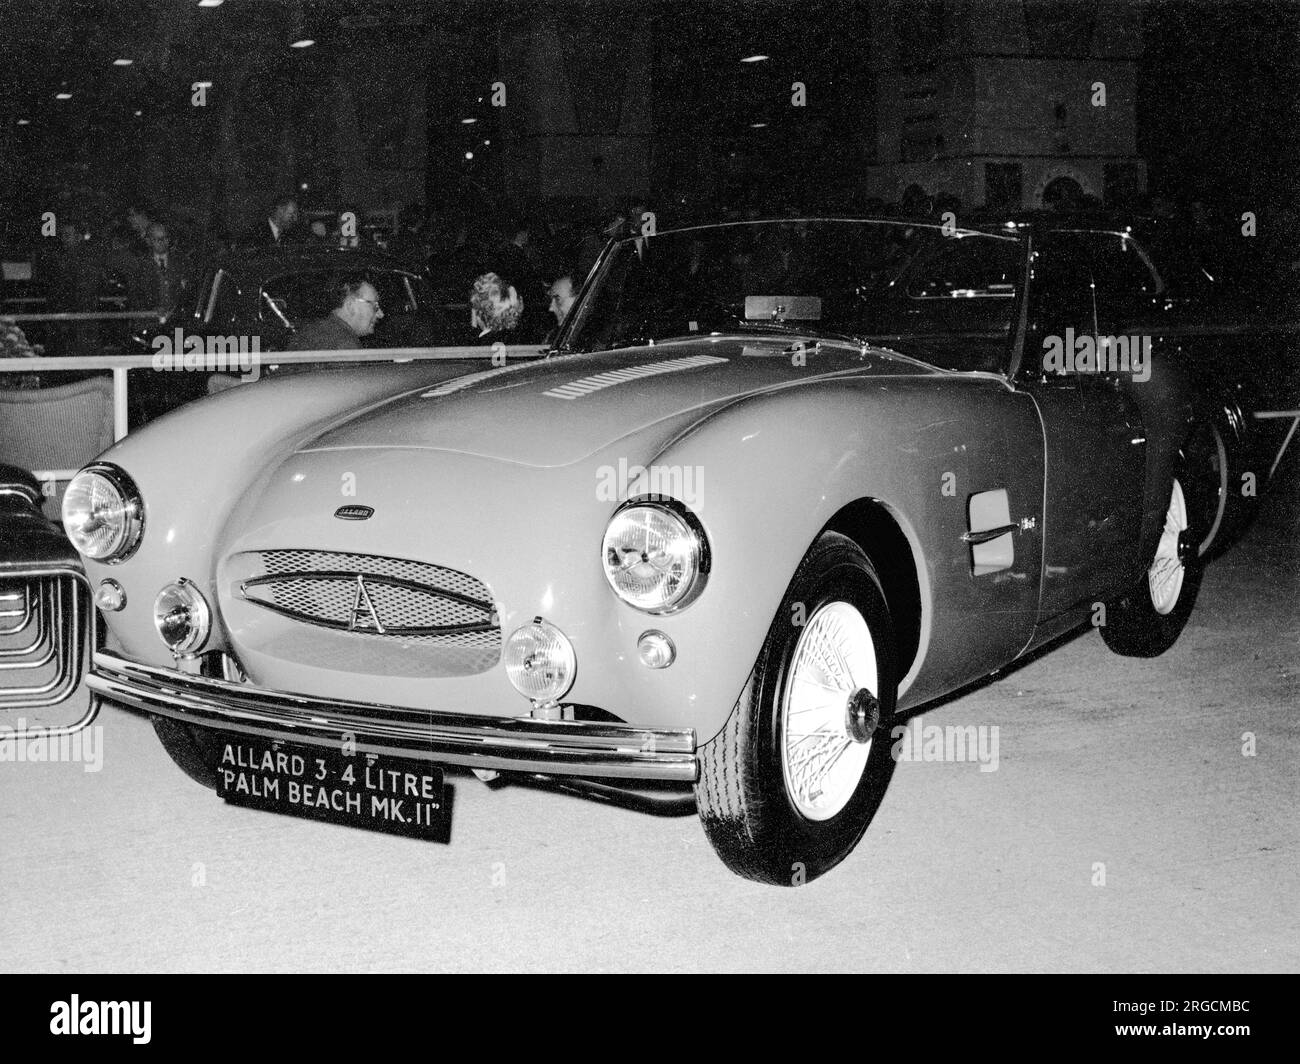 Allard 3.4 litre 'Palm Beach' Mk.II sports car. Stock Photo